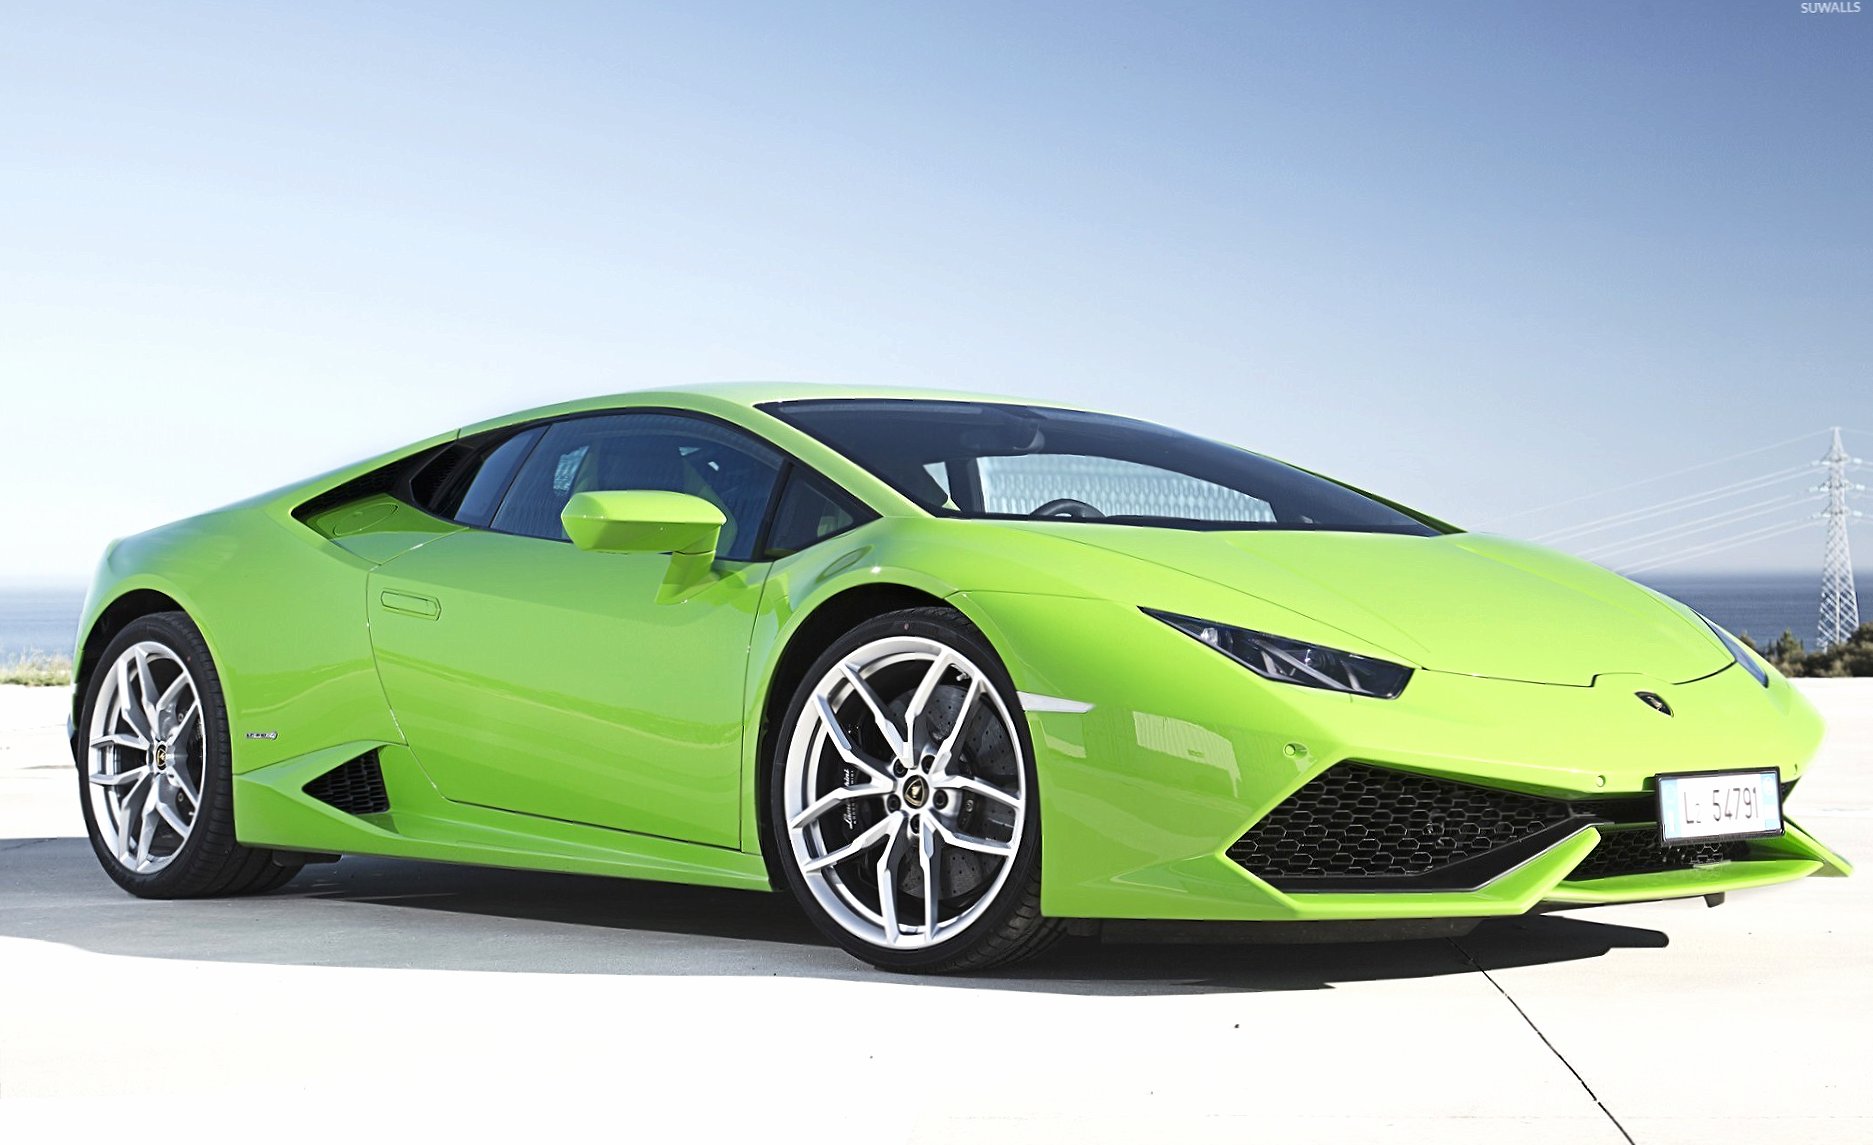 2014 Green Lamborghini Huracan at 1334 x 750 iPhone 7 size wallpapers HD quality